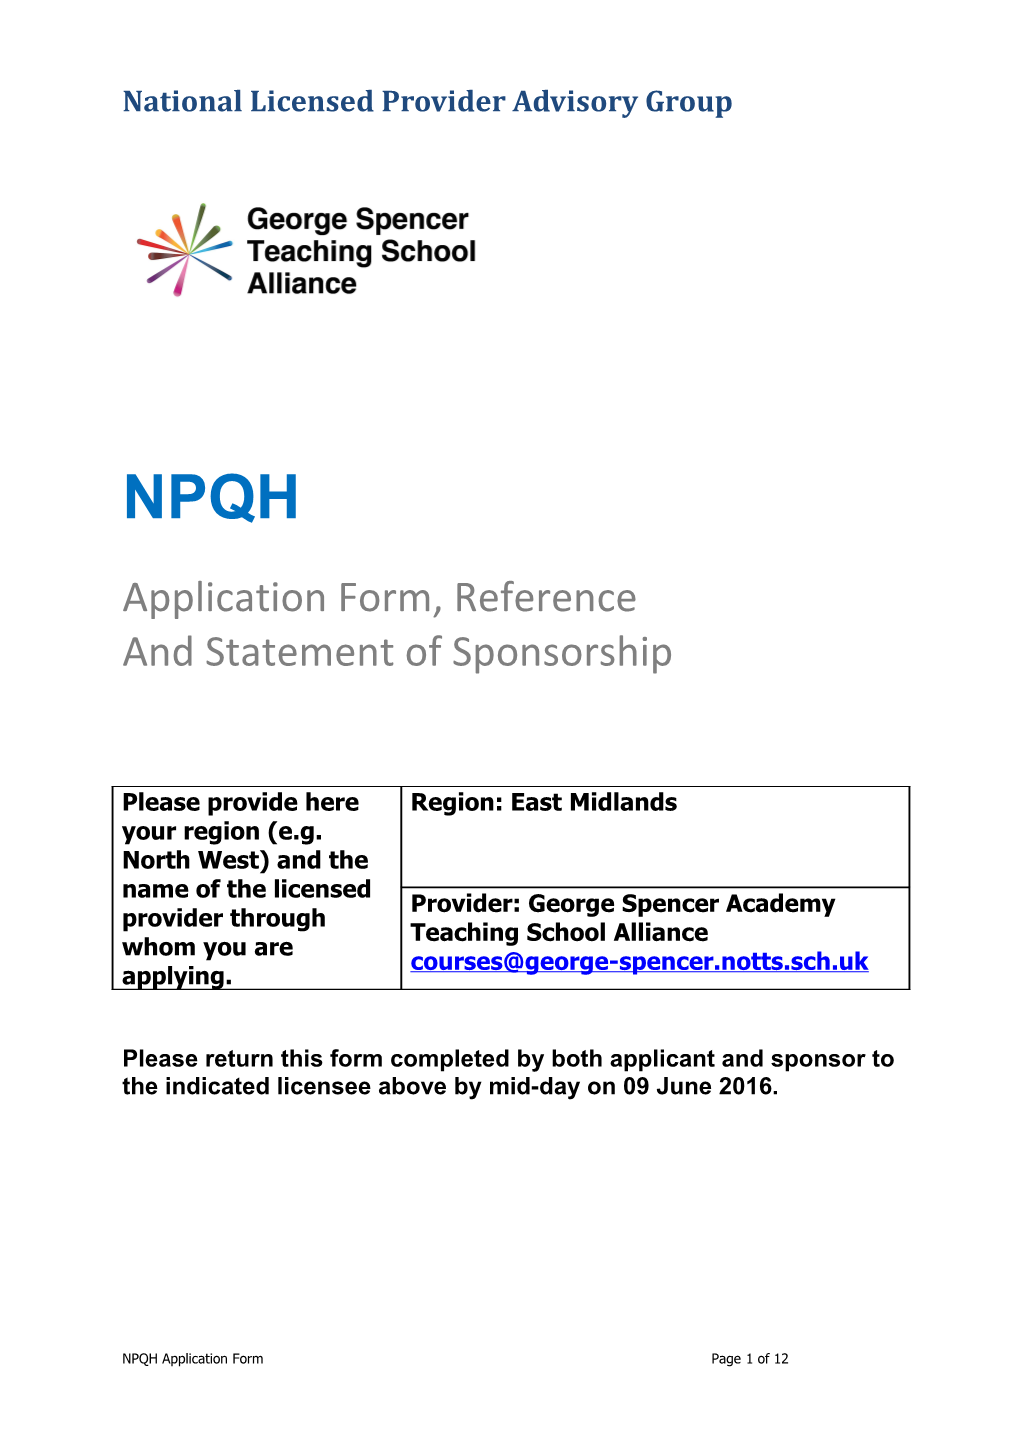 NPQH Application Form